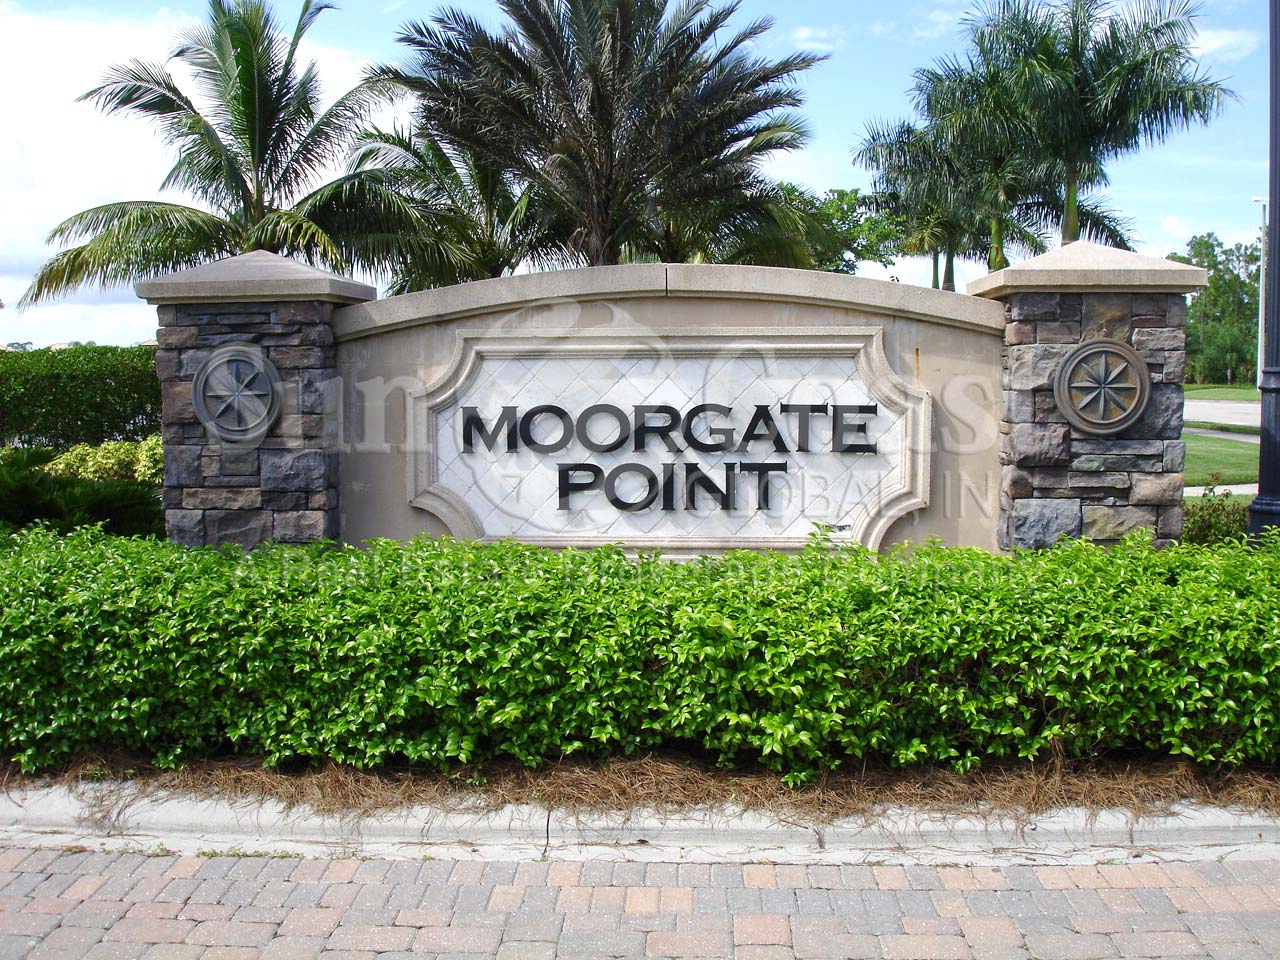 Moorgate Point signage